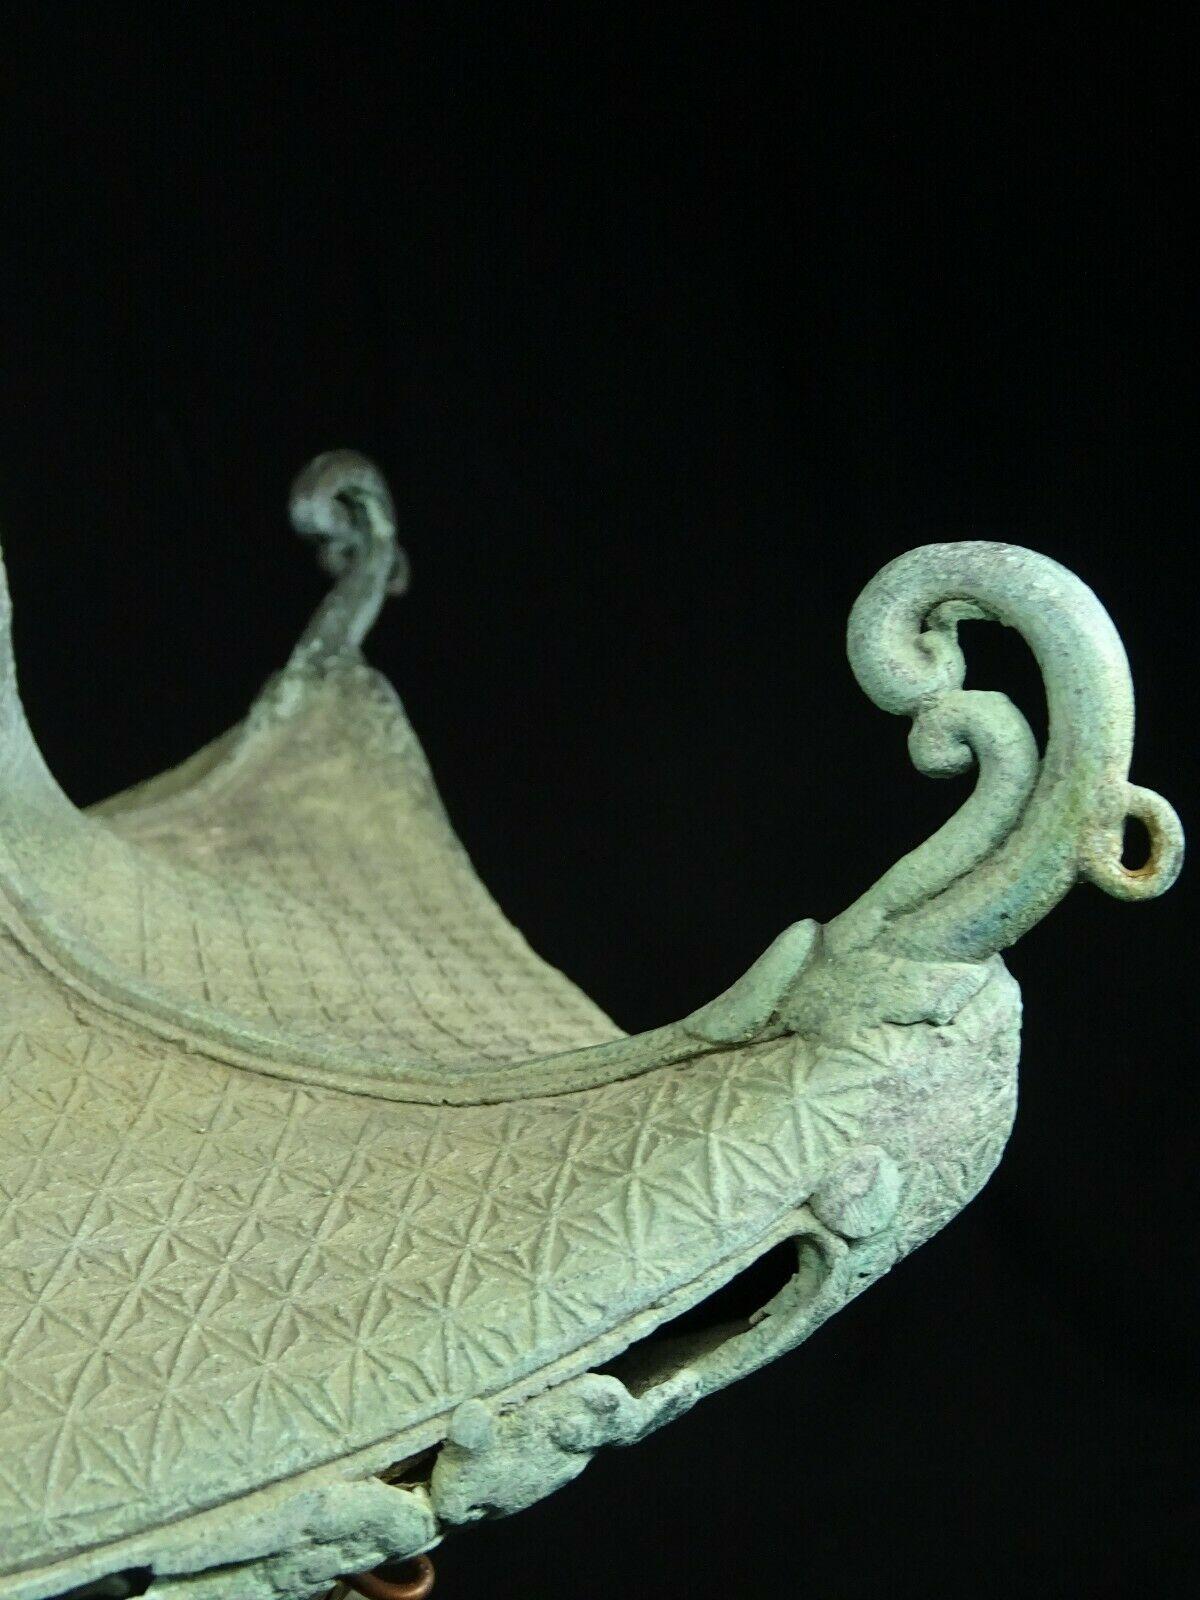 20th Century Japanese Antique Pagoda Tea House Bronze Lantern, Dragon Finial and Fine Details